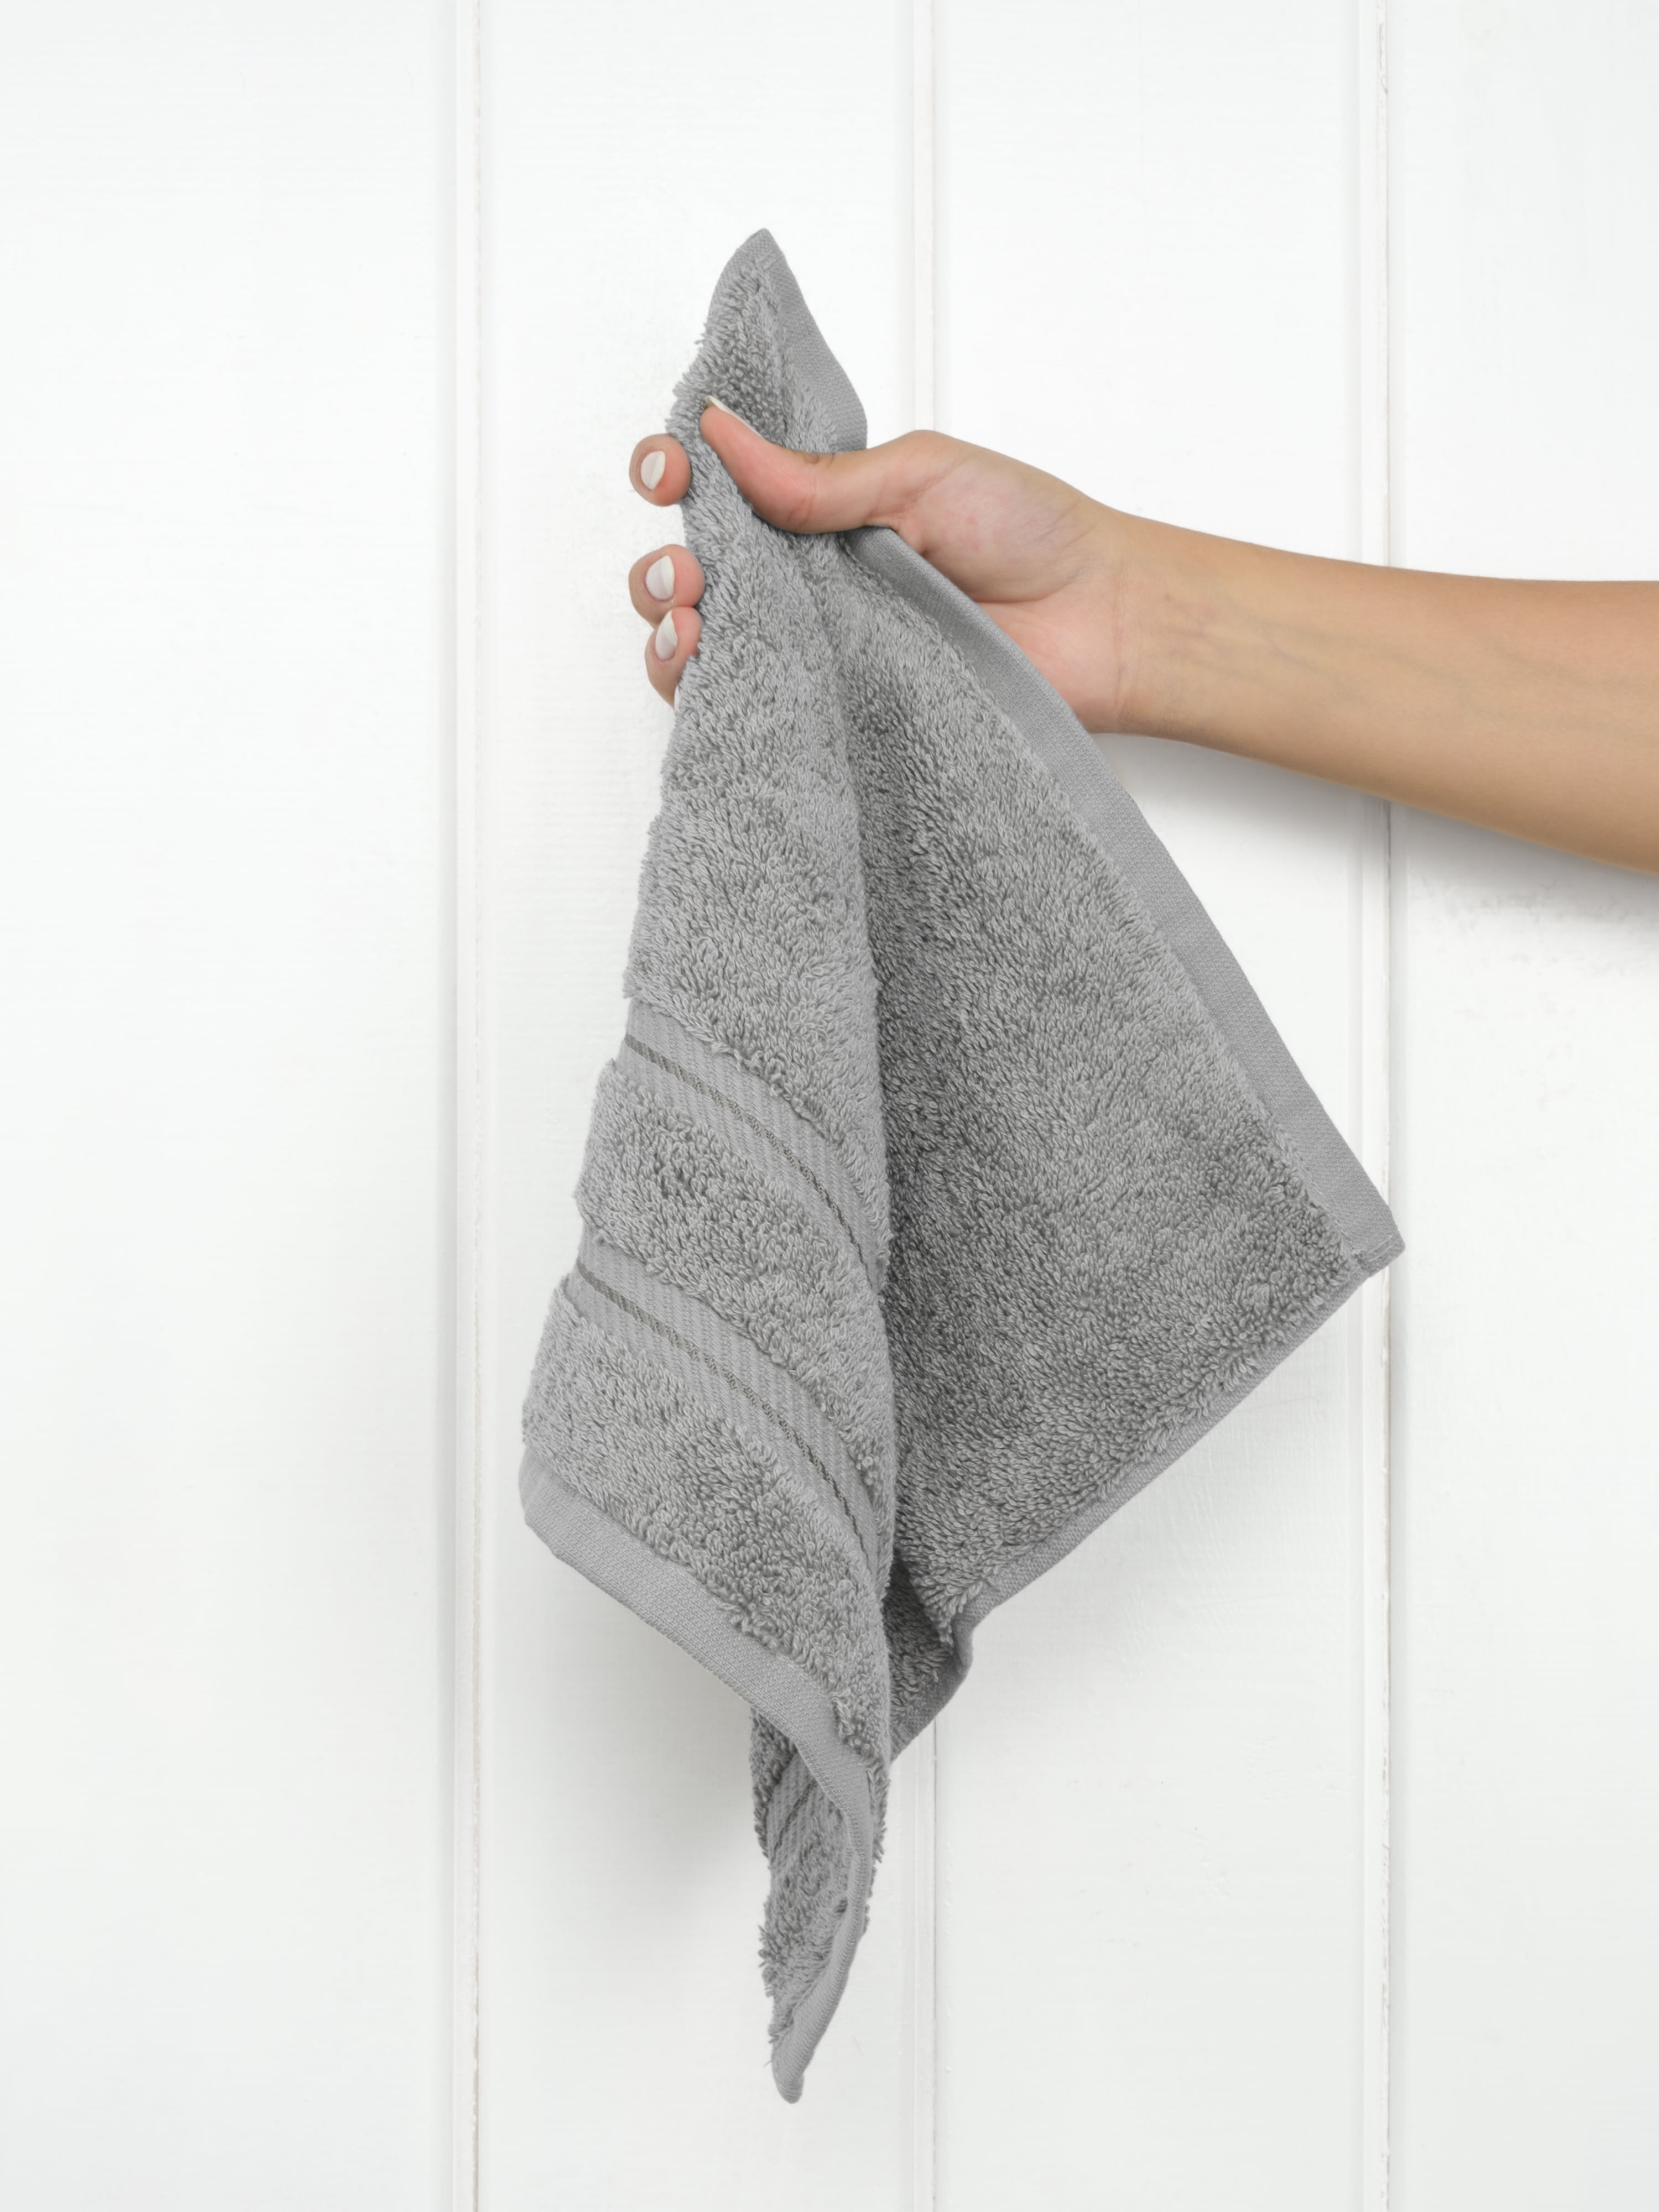 American Soft Linen 6 Piece Towel Set: Wrap Yourself in Luxury!